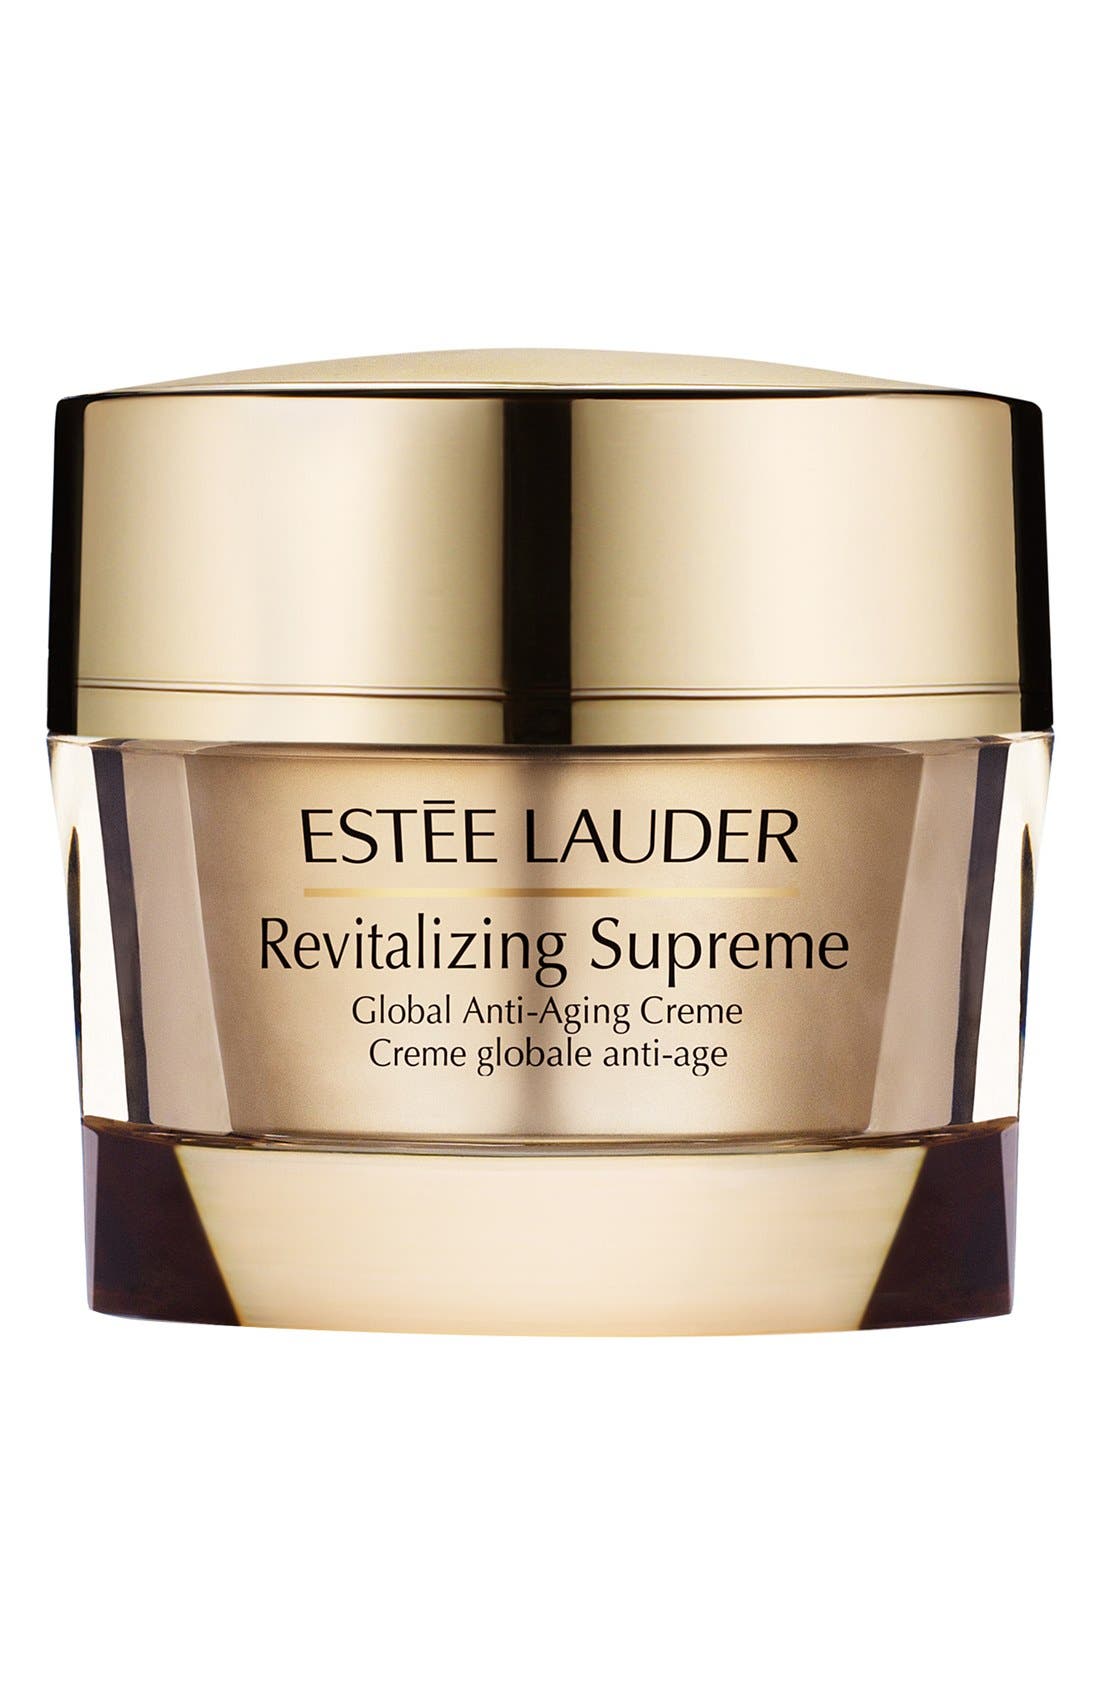 UPC 027131826705 product image for Estee Lauder 'Revitalizing Supreme' Global Anti-Aging Creme, Size 1.7 oz | upcitemdb.com